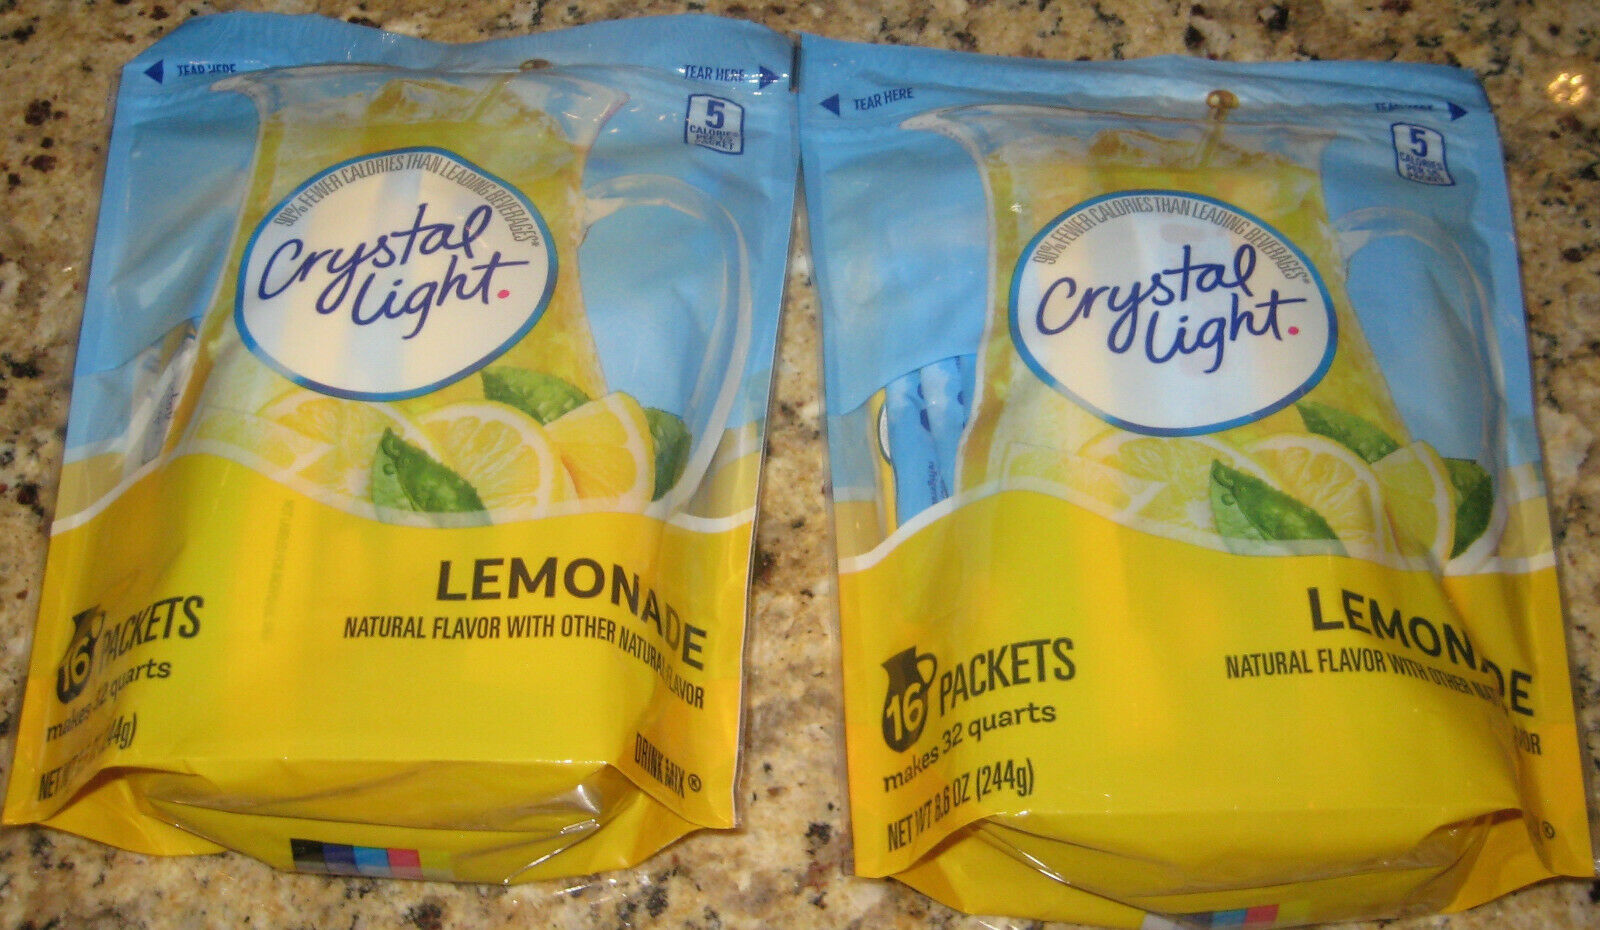 Crystal Light Lemonade - (2) Bags Of 16 Pitcher Packs Each.